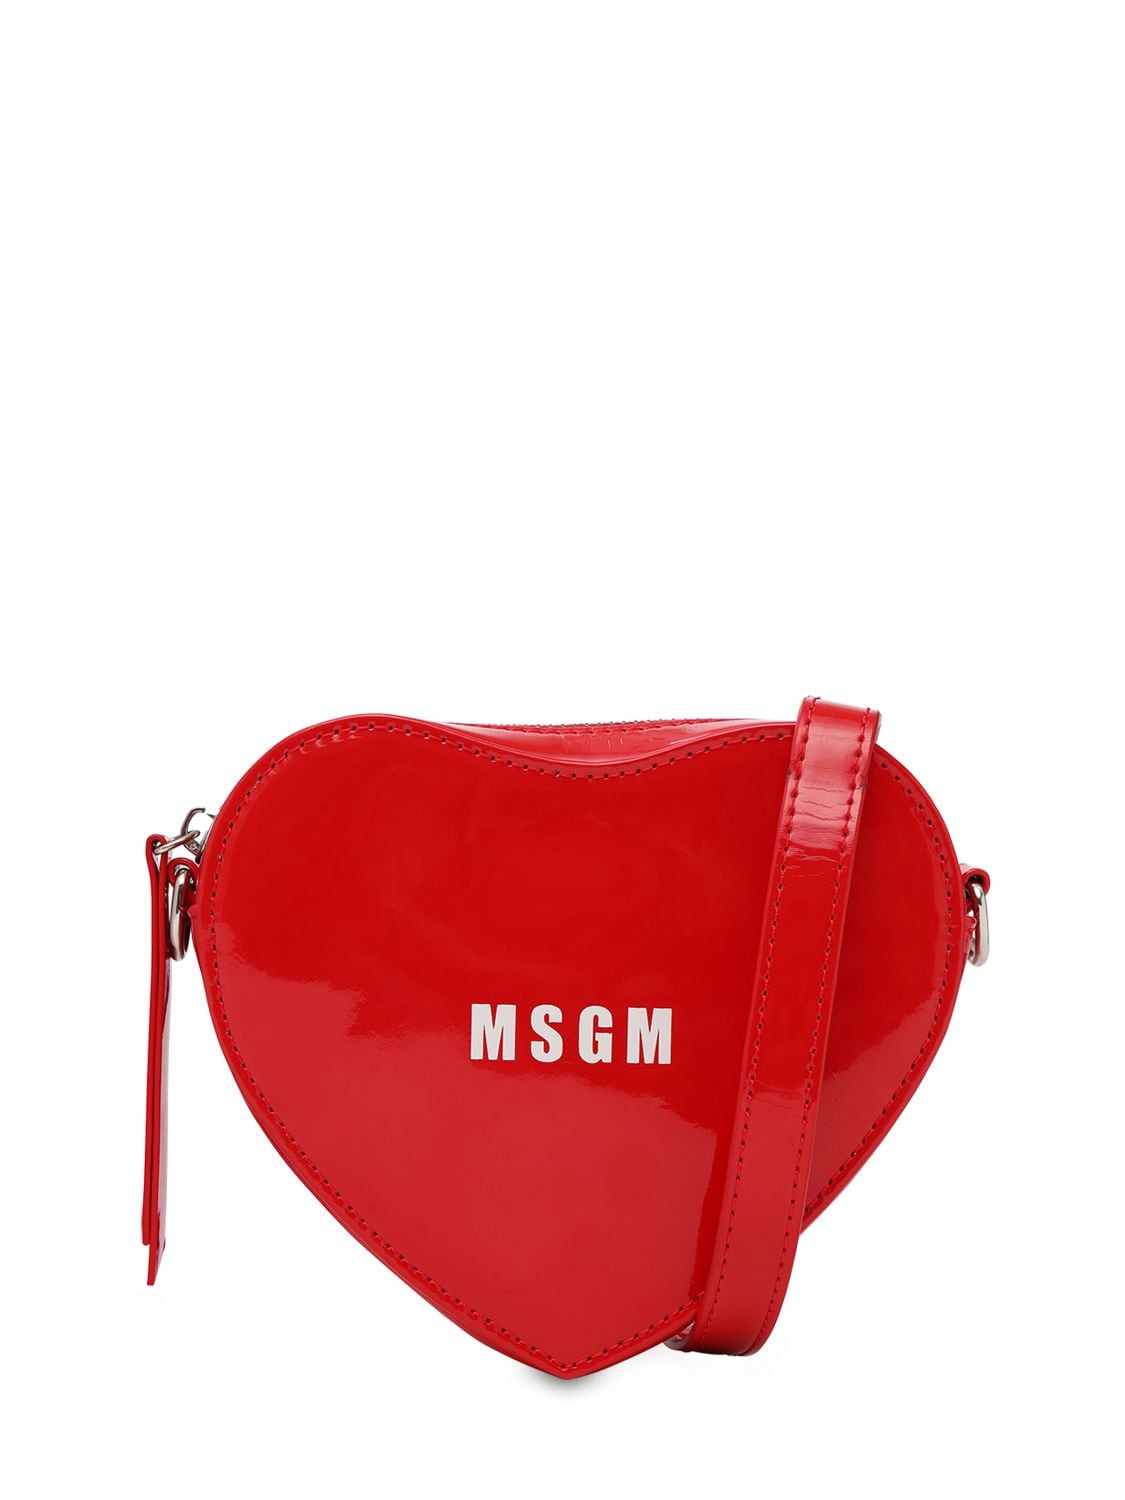 MSGM FAUX LEATHER HEART SHOULDER BAG,73I93G067-MDQW0